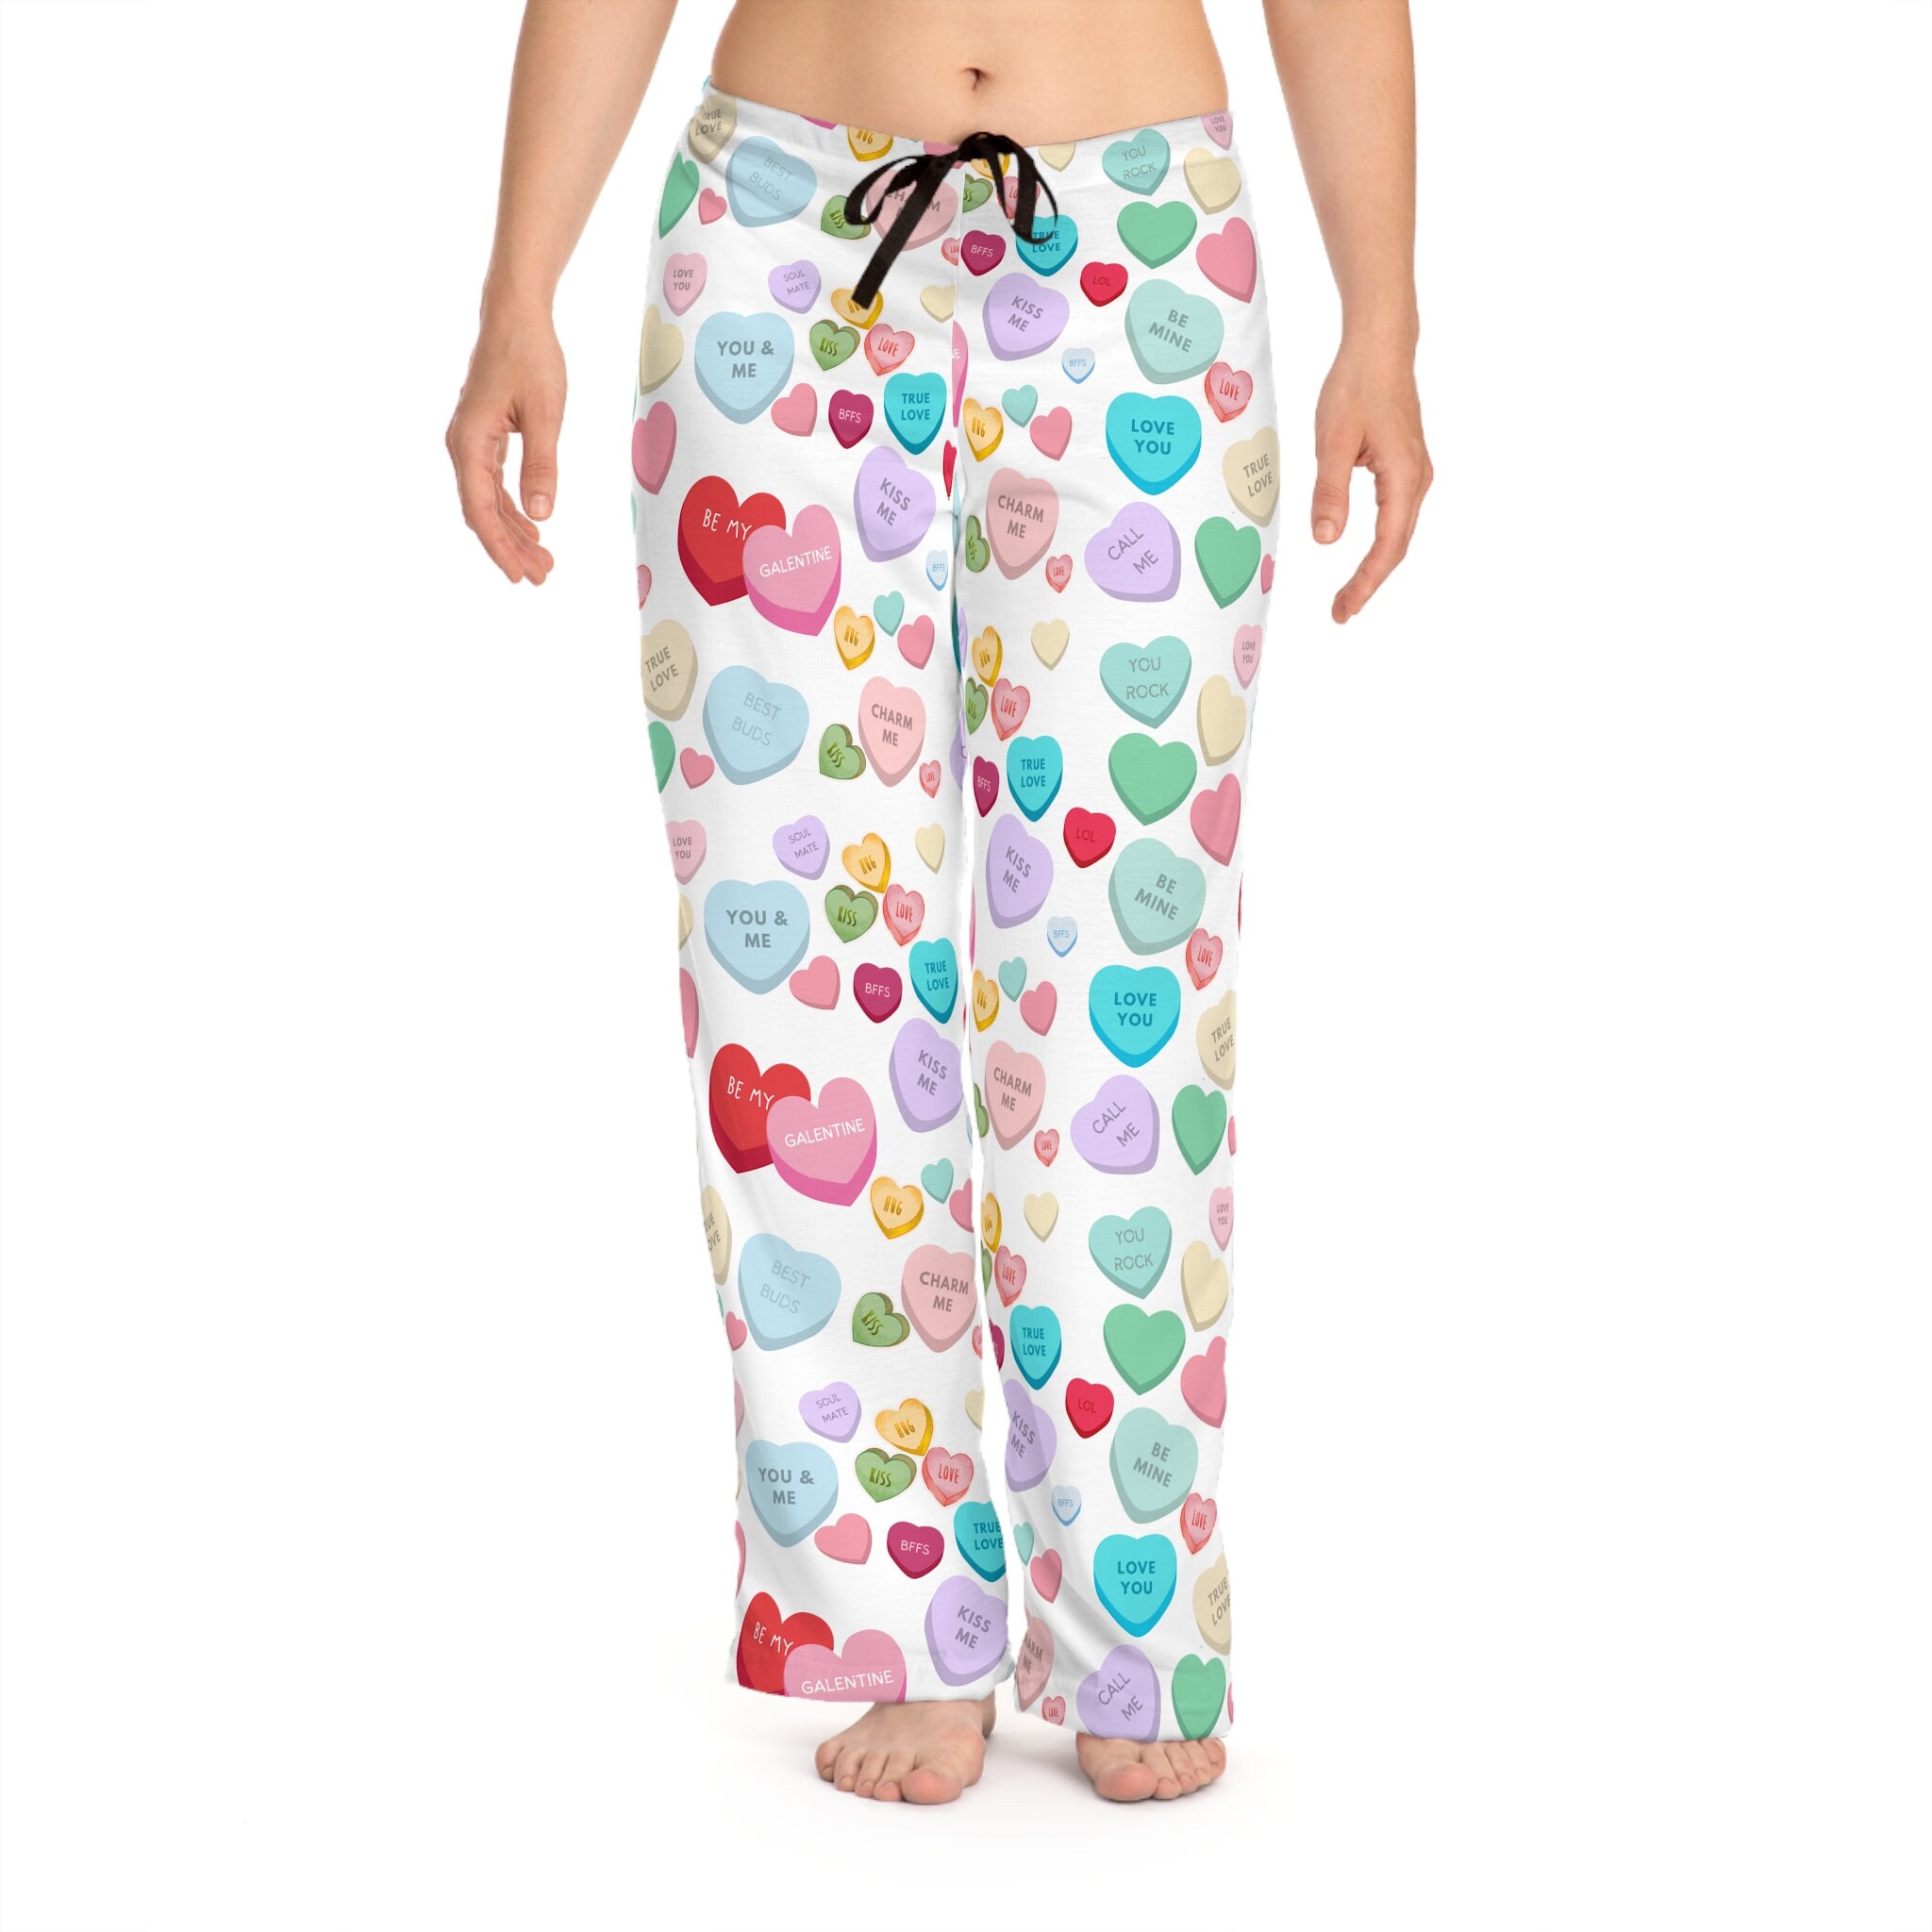 Рajama Threesome Set Short Pajama Set Gift for Women Girl Teen PJ Sleepwear  Cotton Pj Set Cute Pjs for Women Gift to Sister Mom Girlfriend 